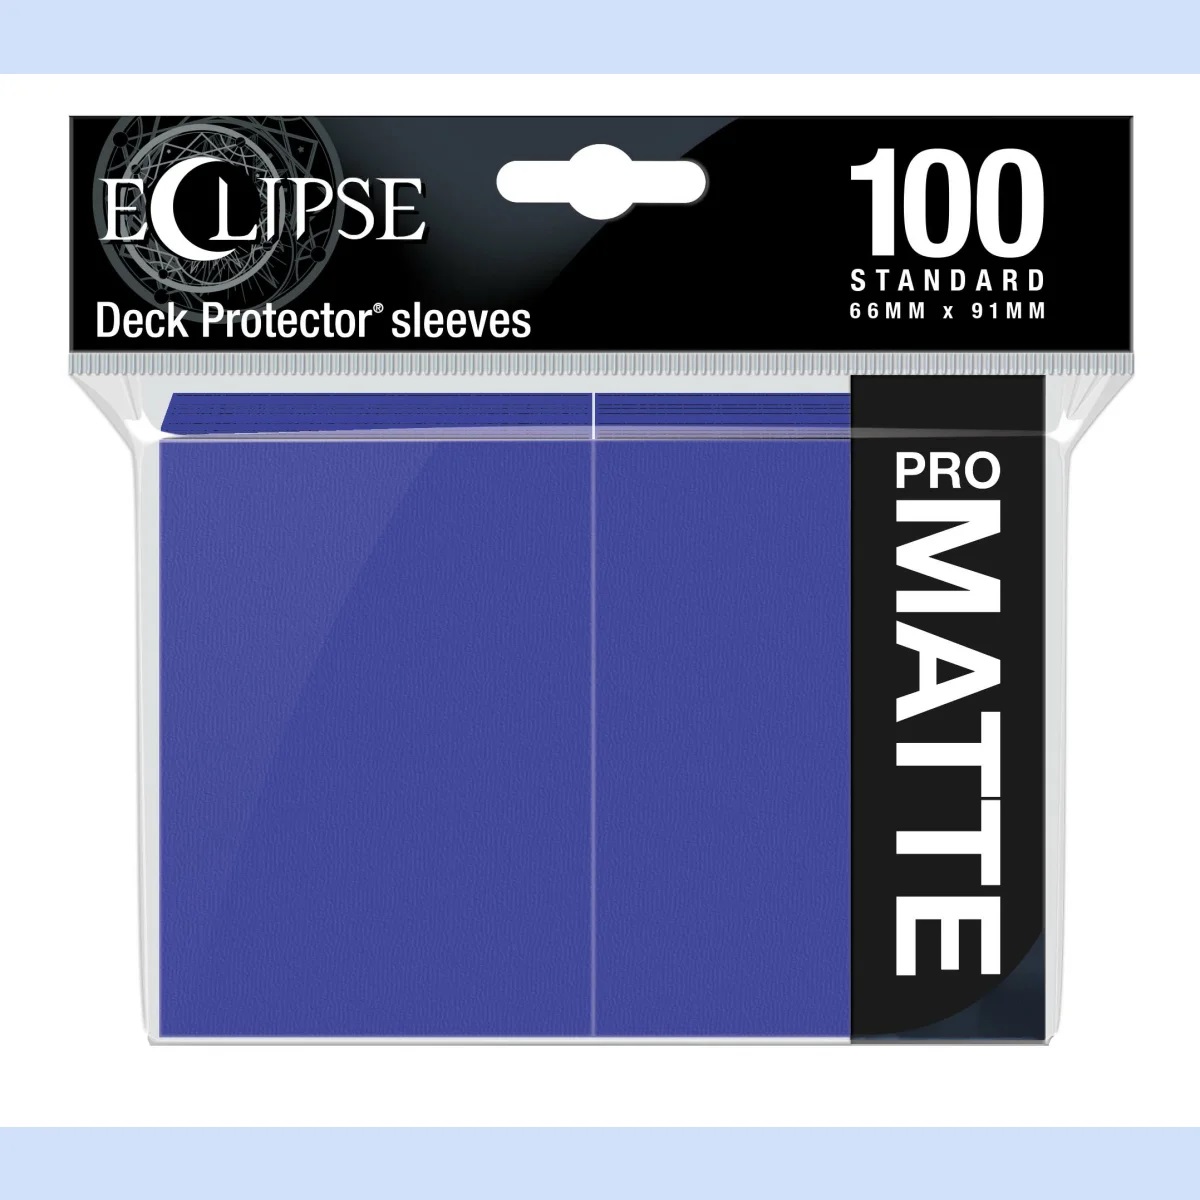 UP Deck Protector ECLIPSE Matte Royal Purple 100ct von Ultra Pro